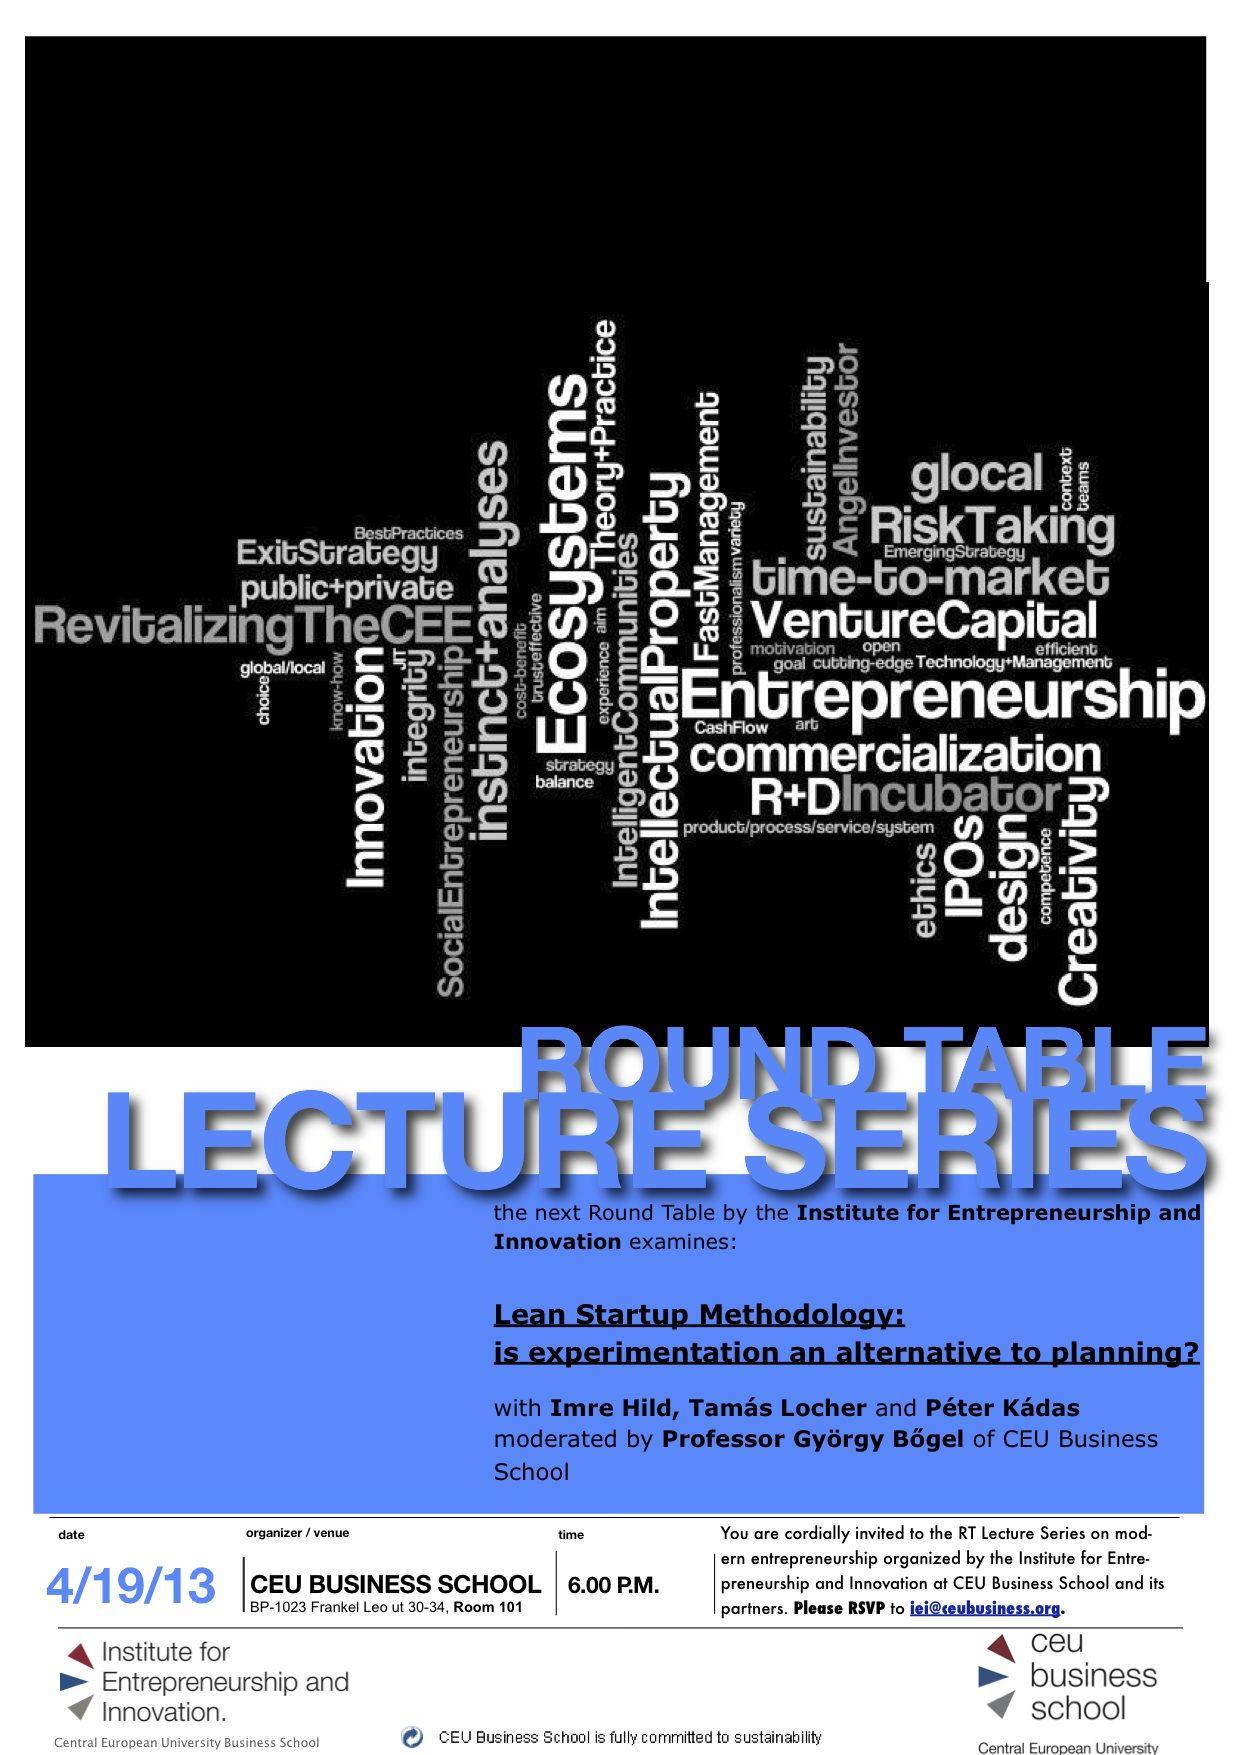 CEU Business School Budapest Event: Lean Startup Methodology On 19 April